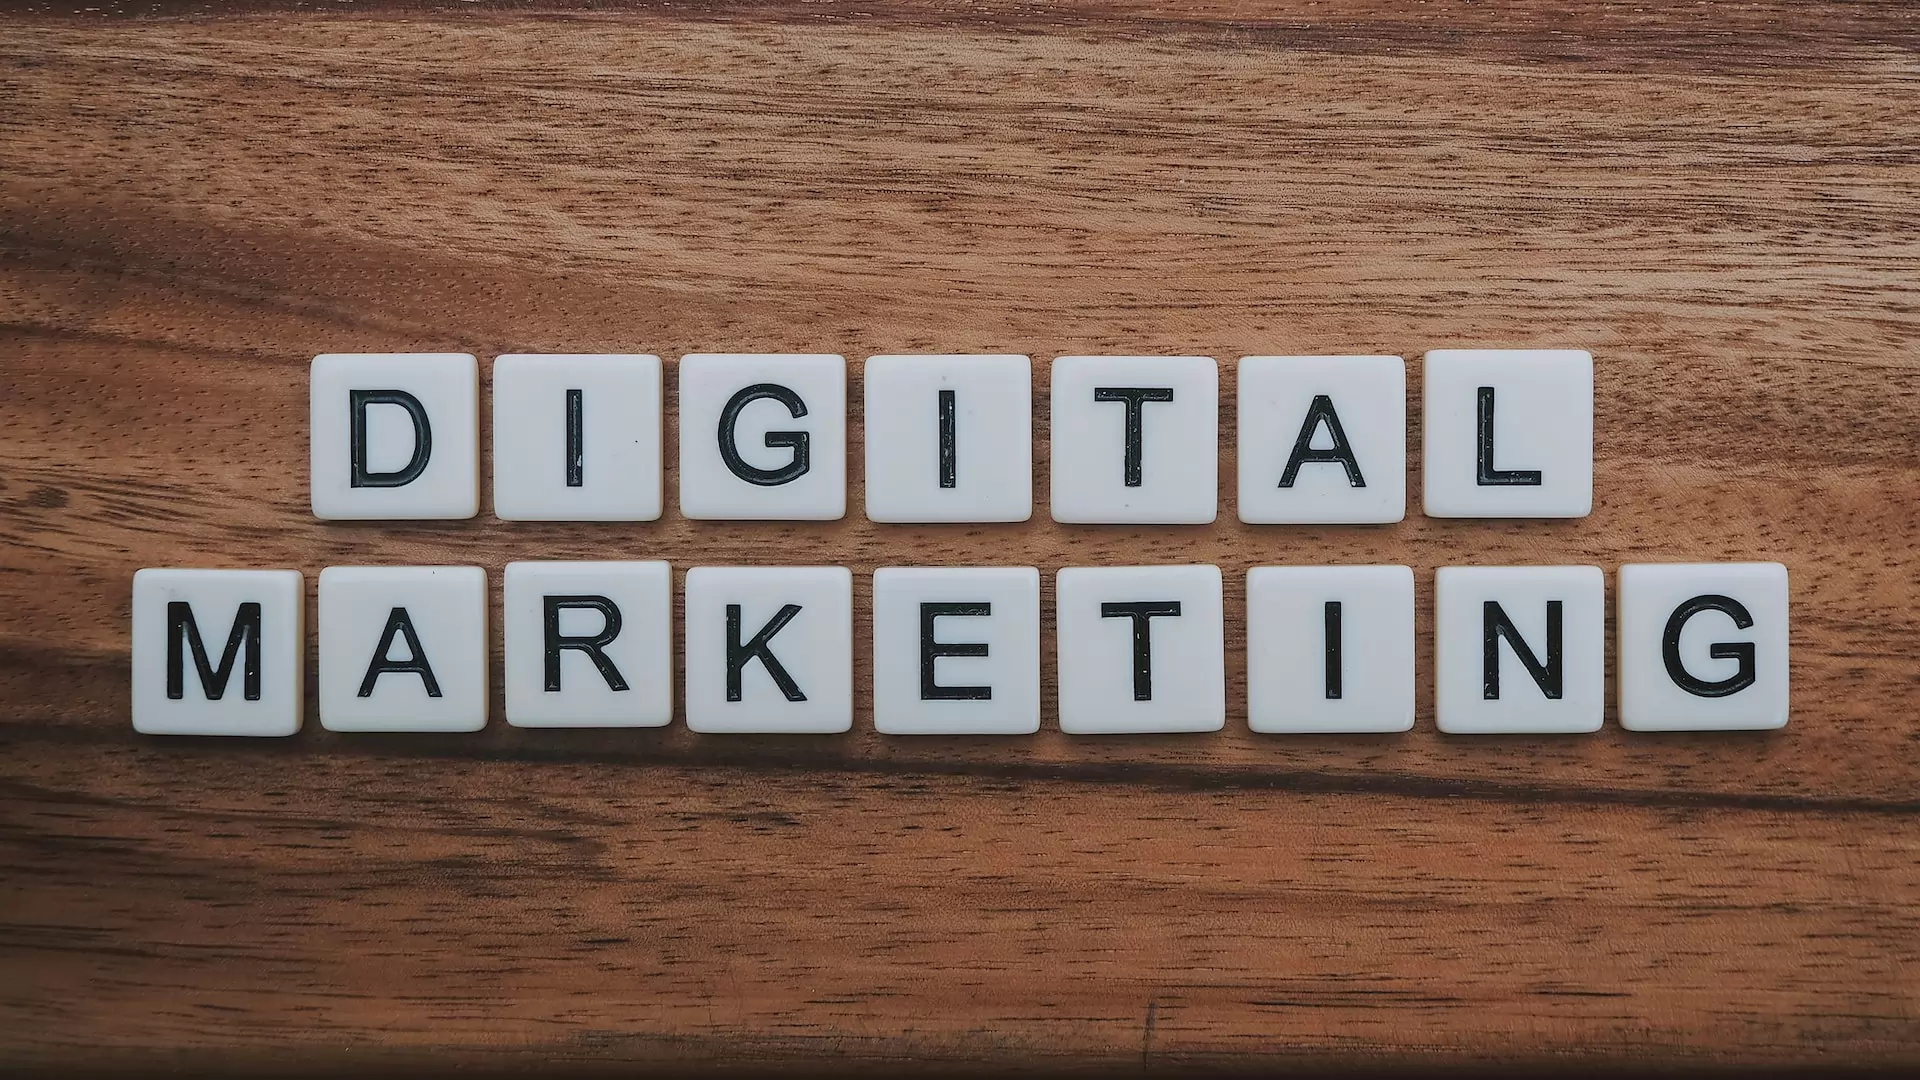 The digital marketing market